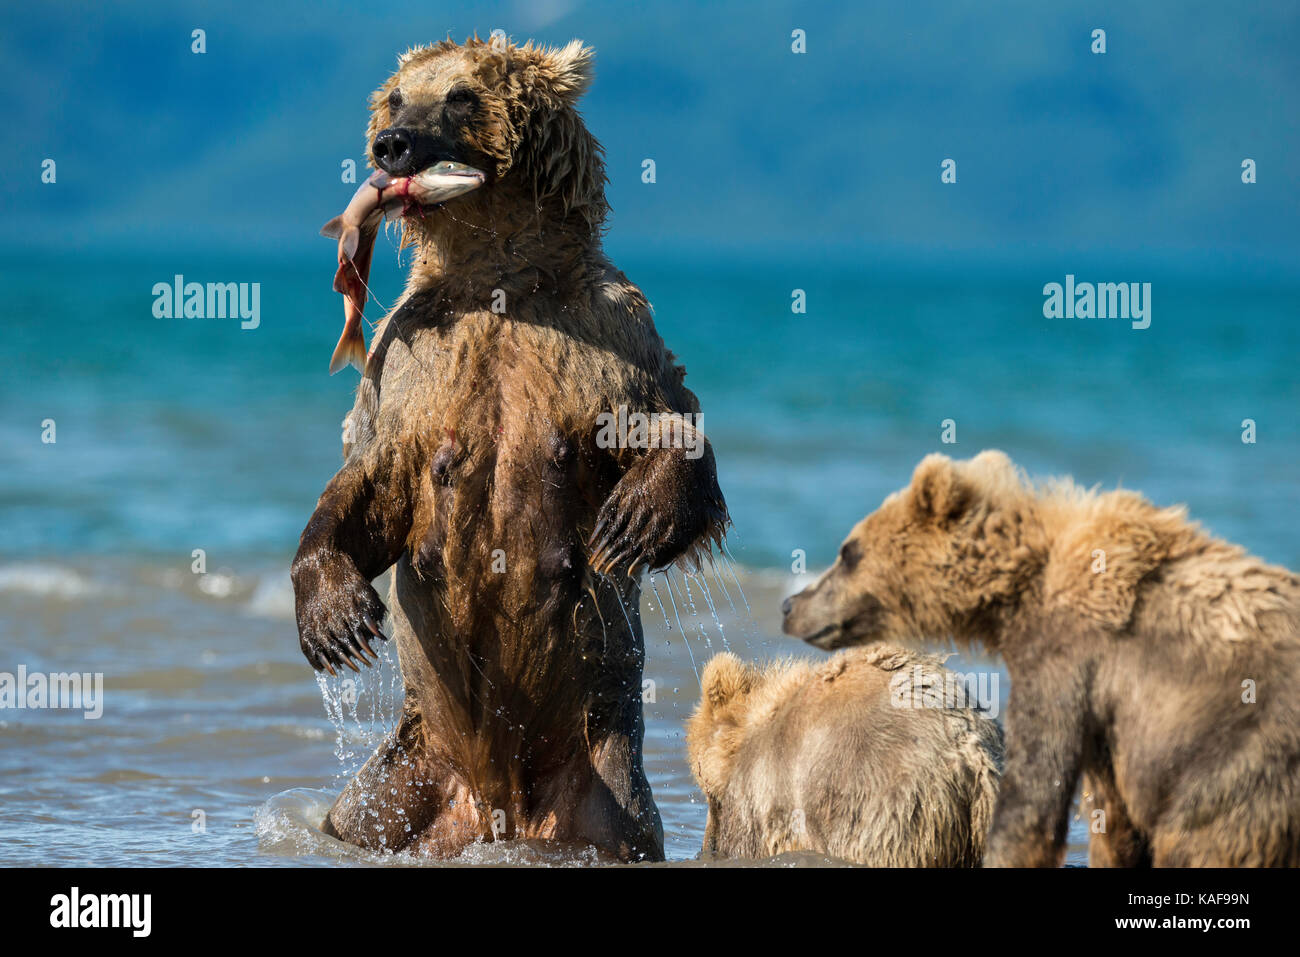 Ours brun attrapant le saumon sockeye pour ses petits, Lac Kuril, Kamchatka, Russie. Banque D'Images